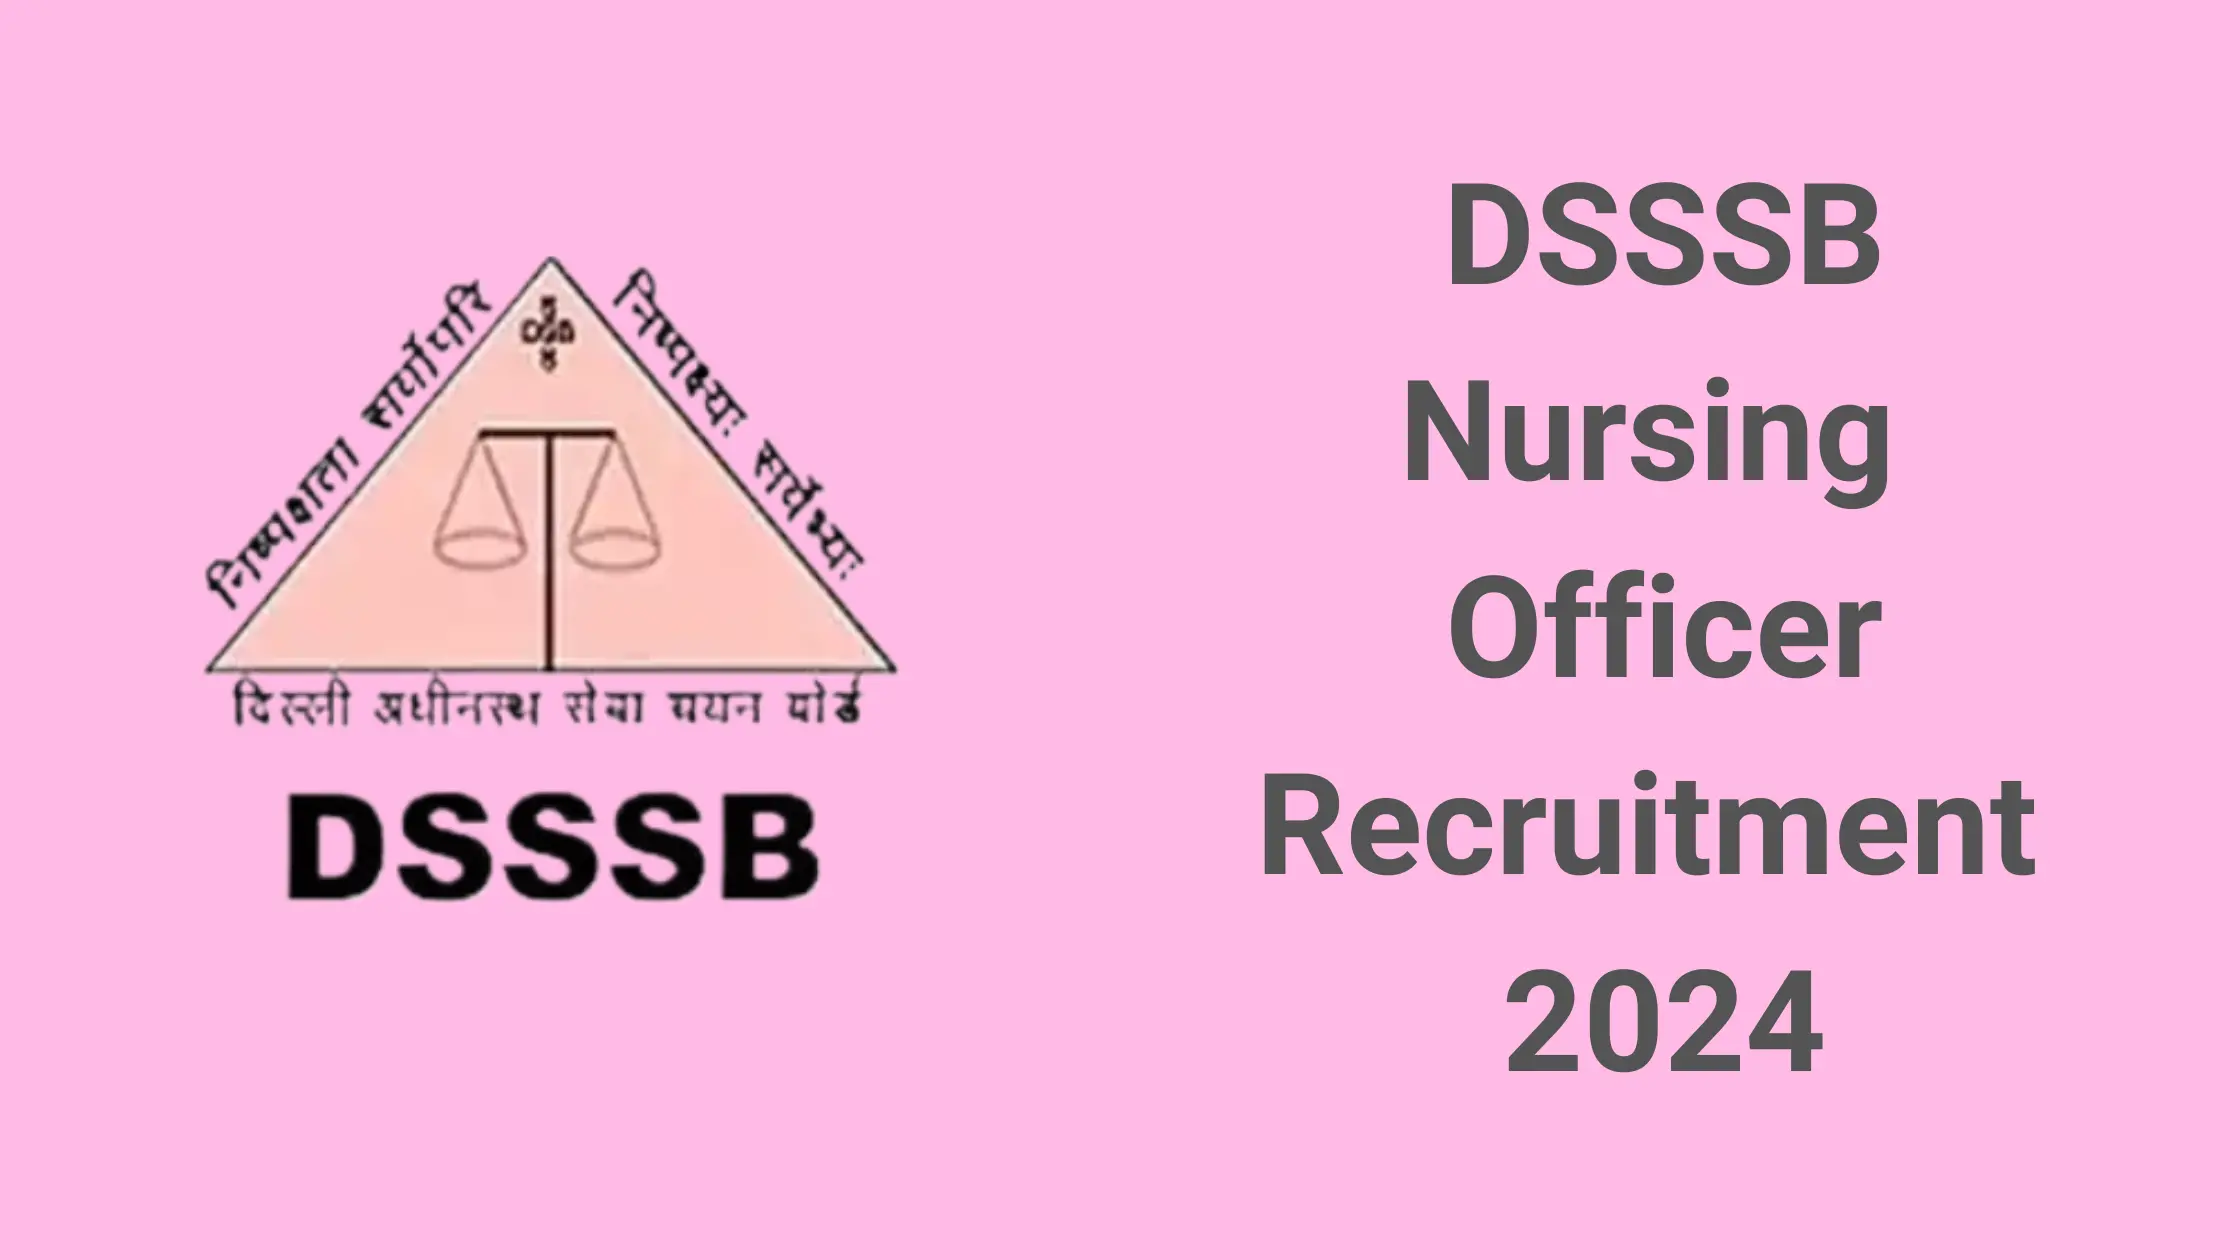 DSSSB nursing Officer Recruitment 2024